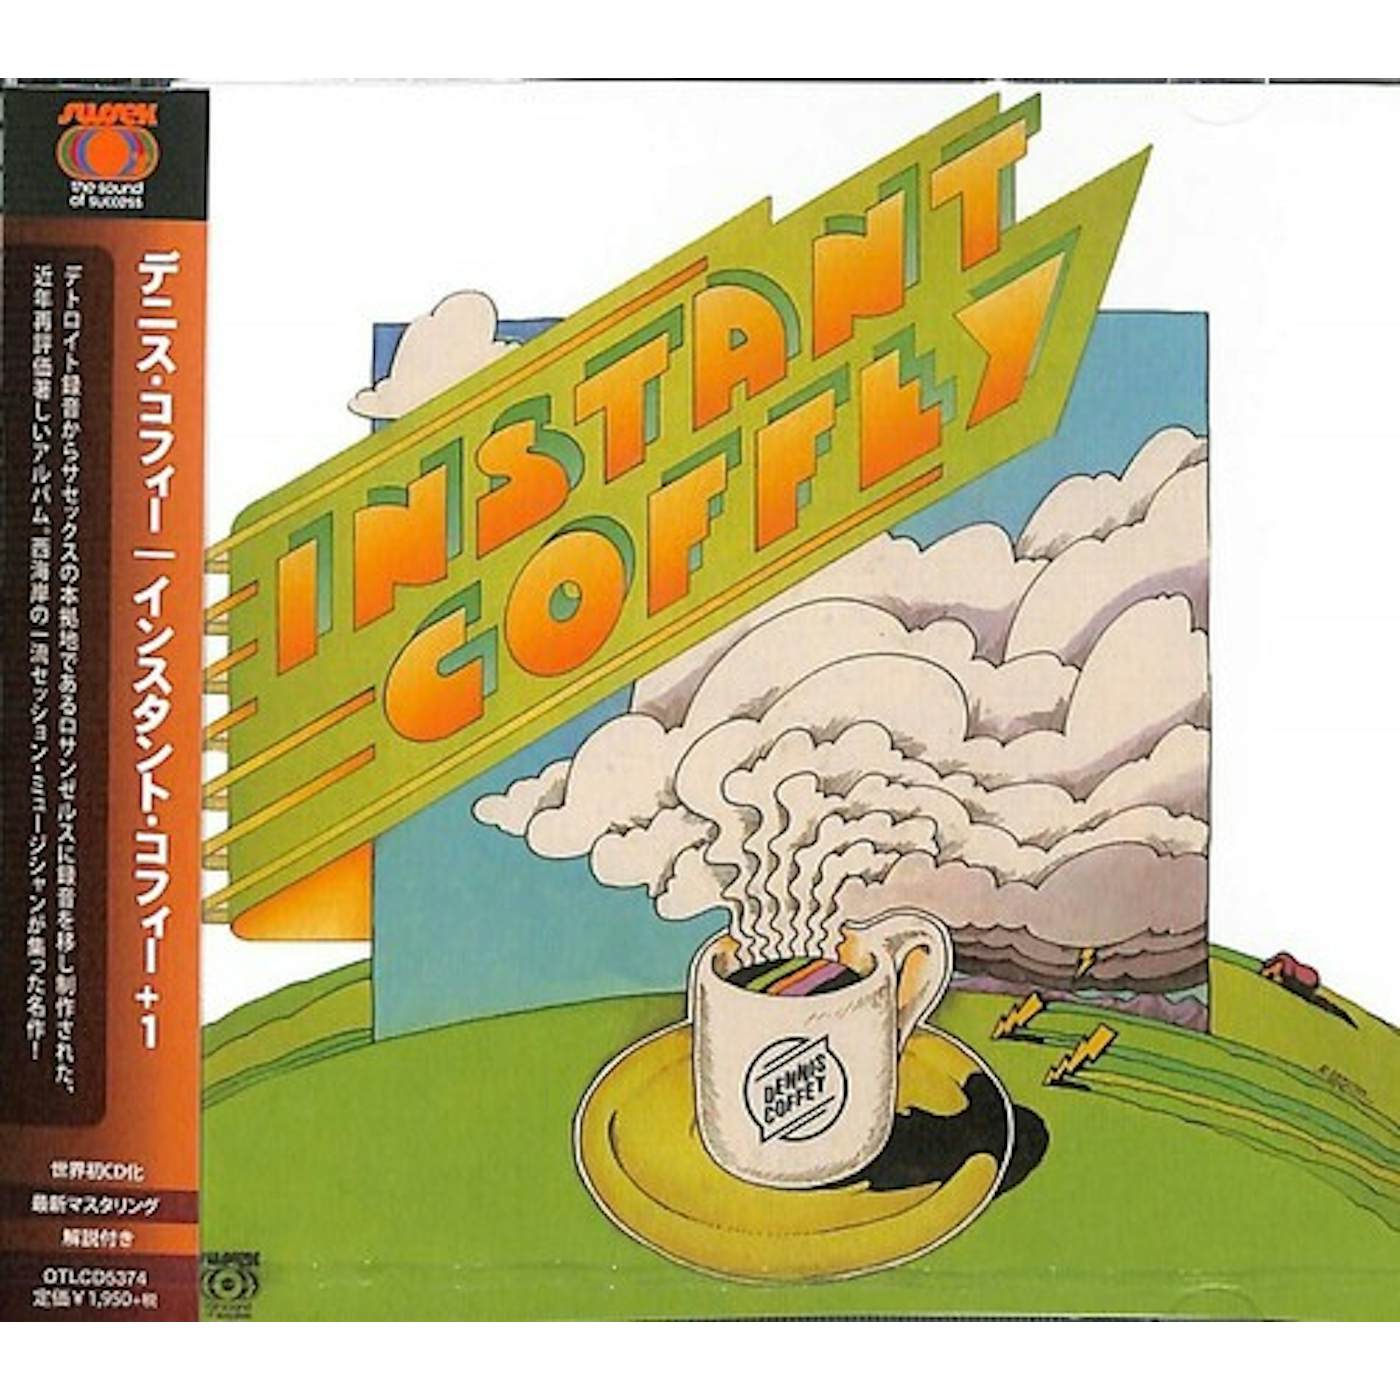 Dennis Coffey Instant Coffey CD